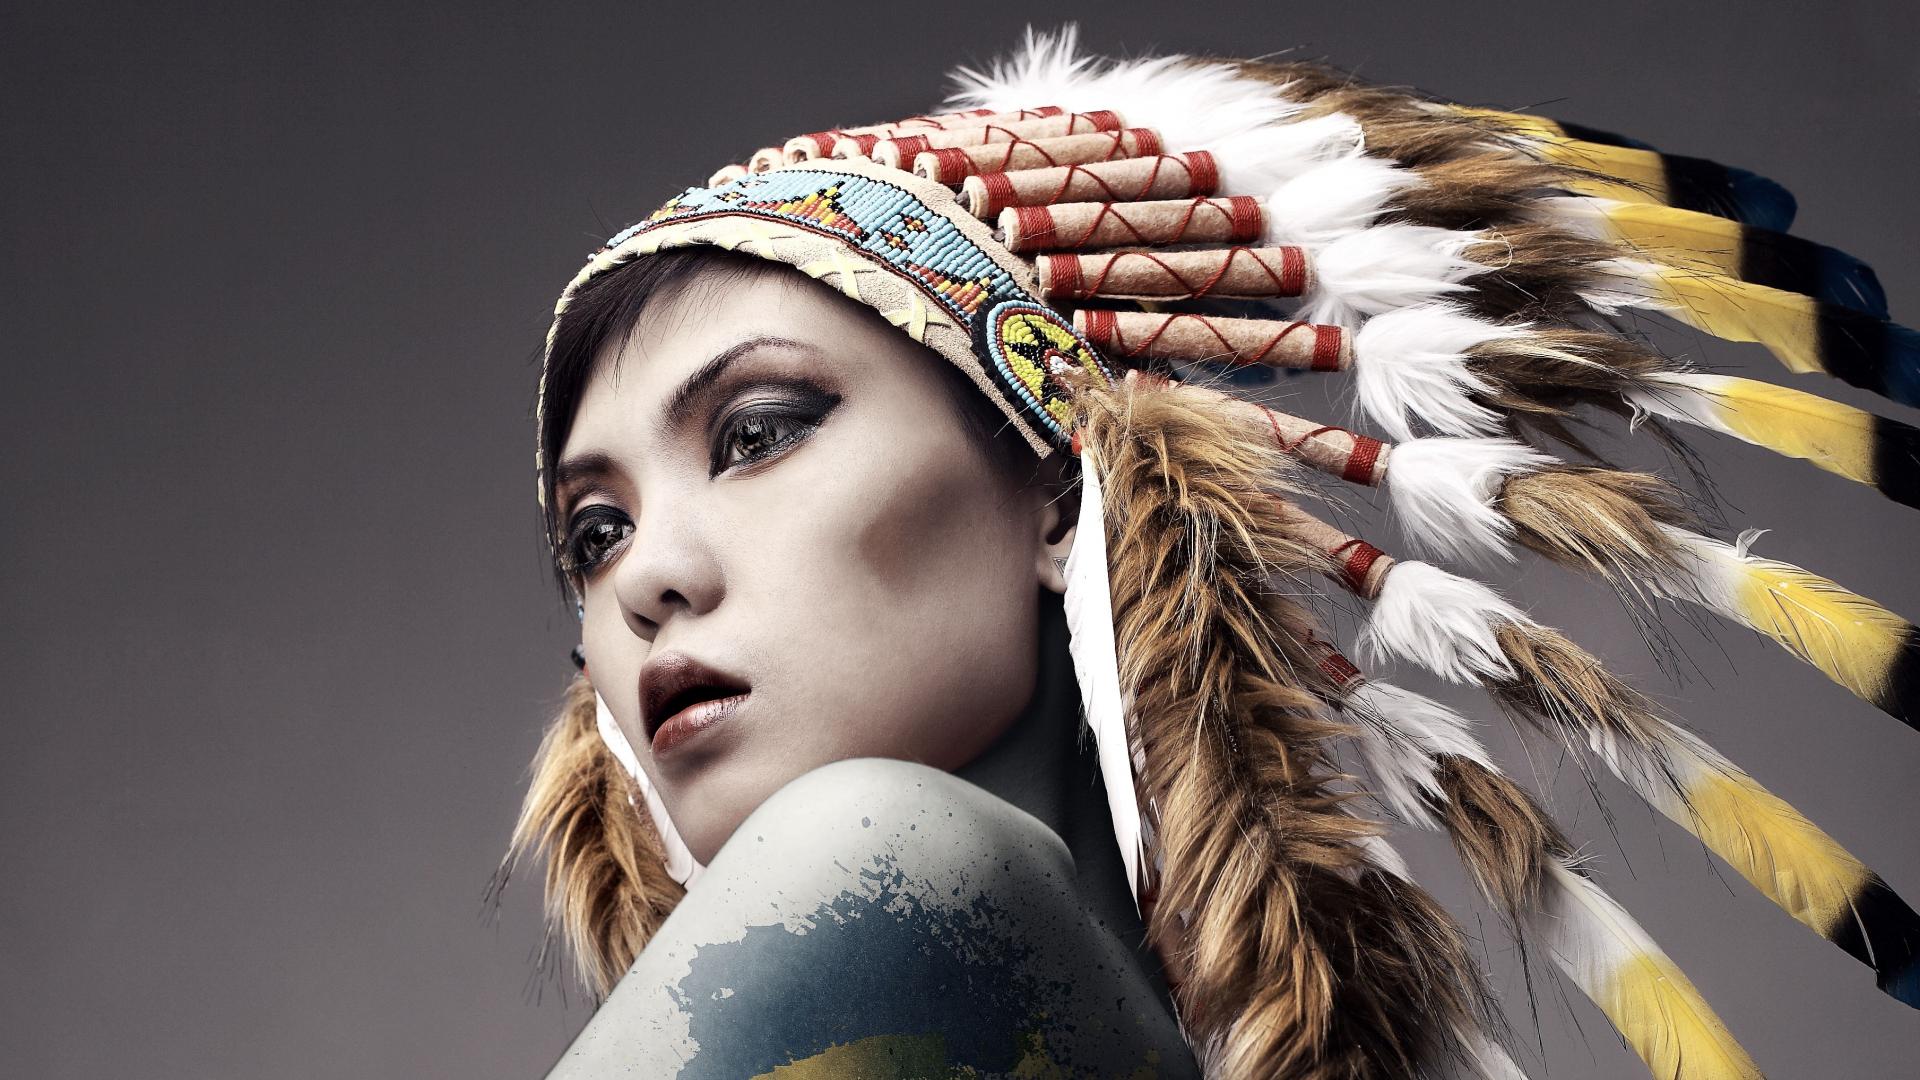 Women artistic fashion feathers head dress body painting